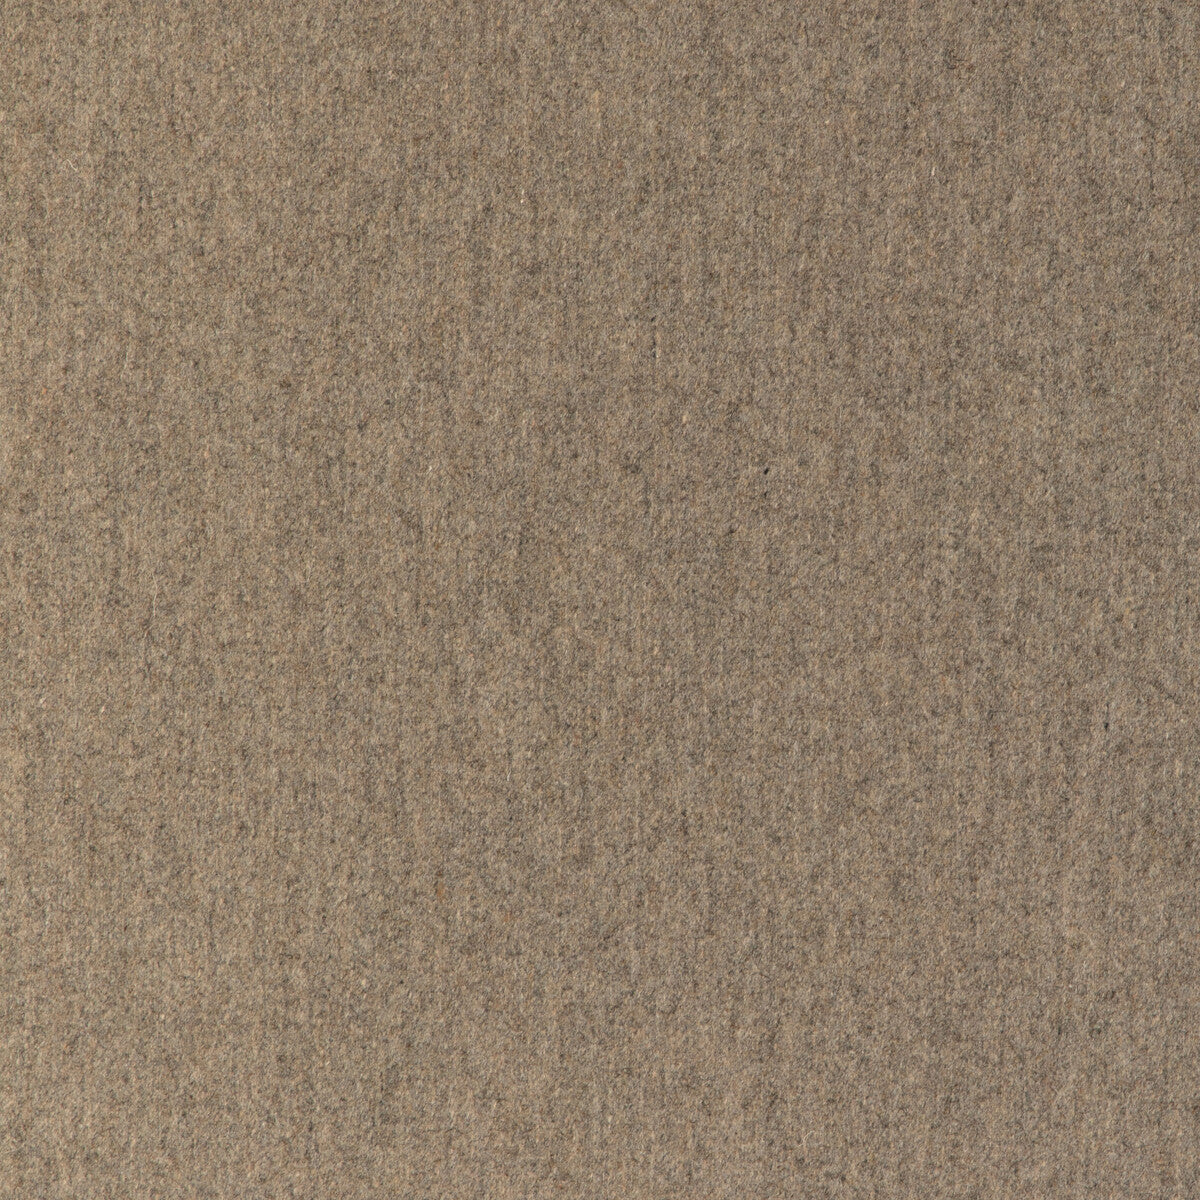 Jefferson Wool fabric in malt color - pattern 34397.1611.0 - by Kravet Contract